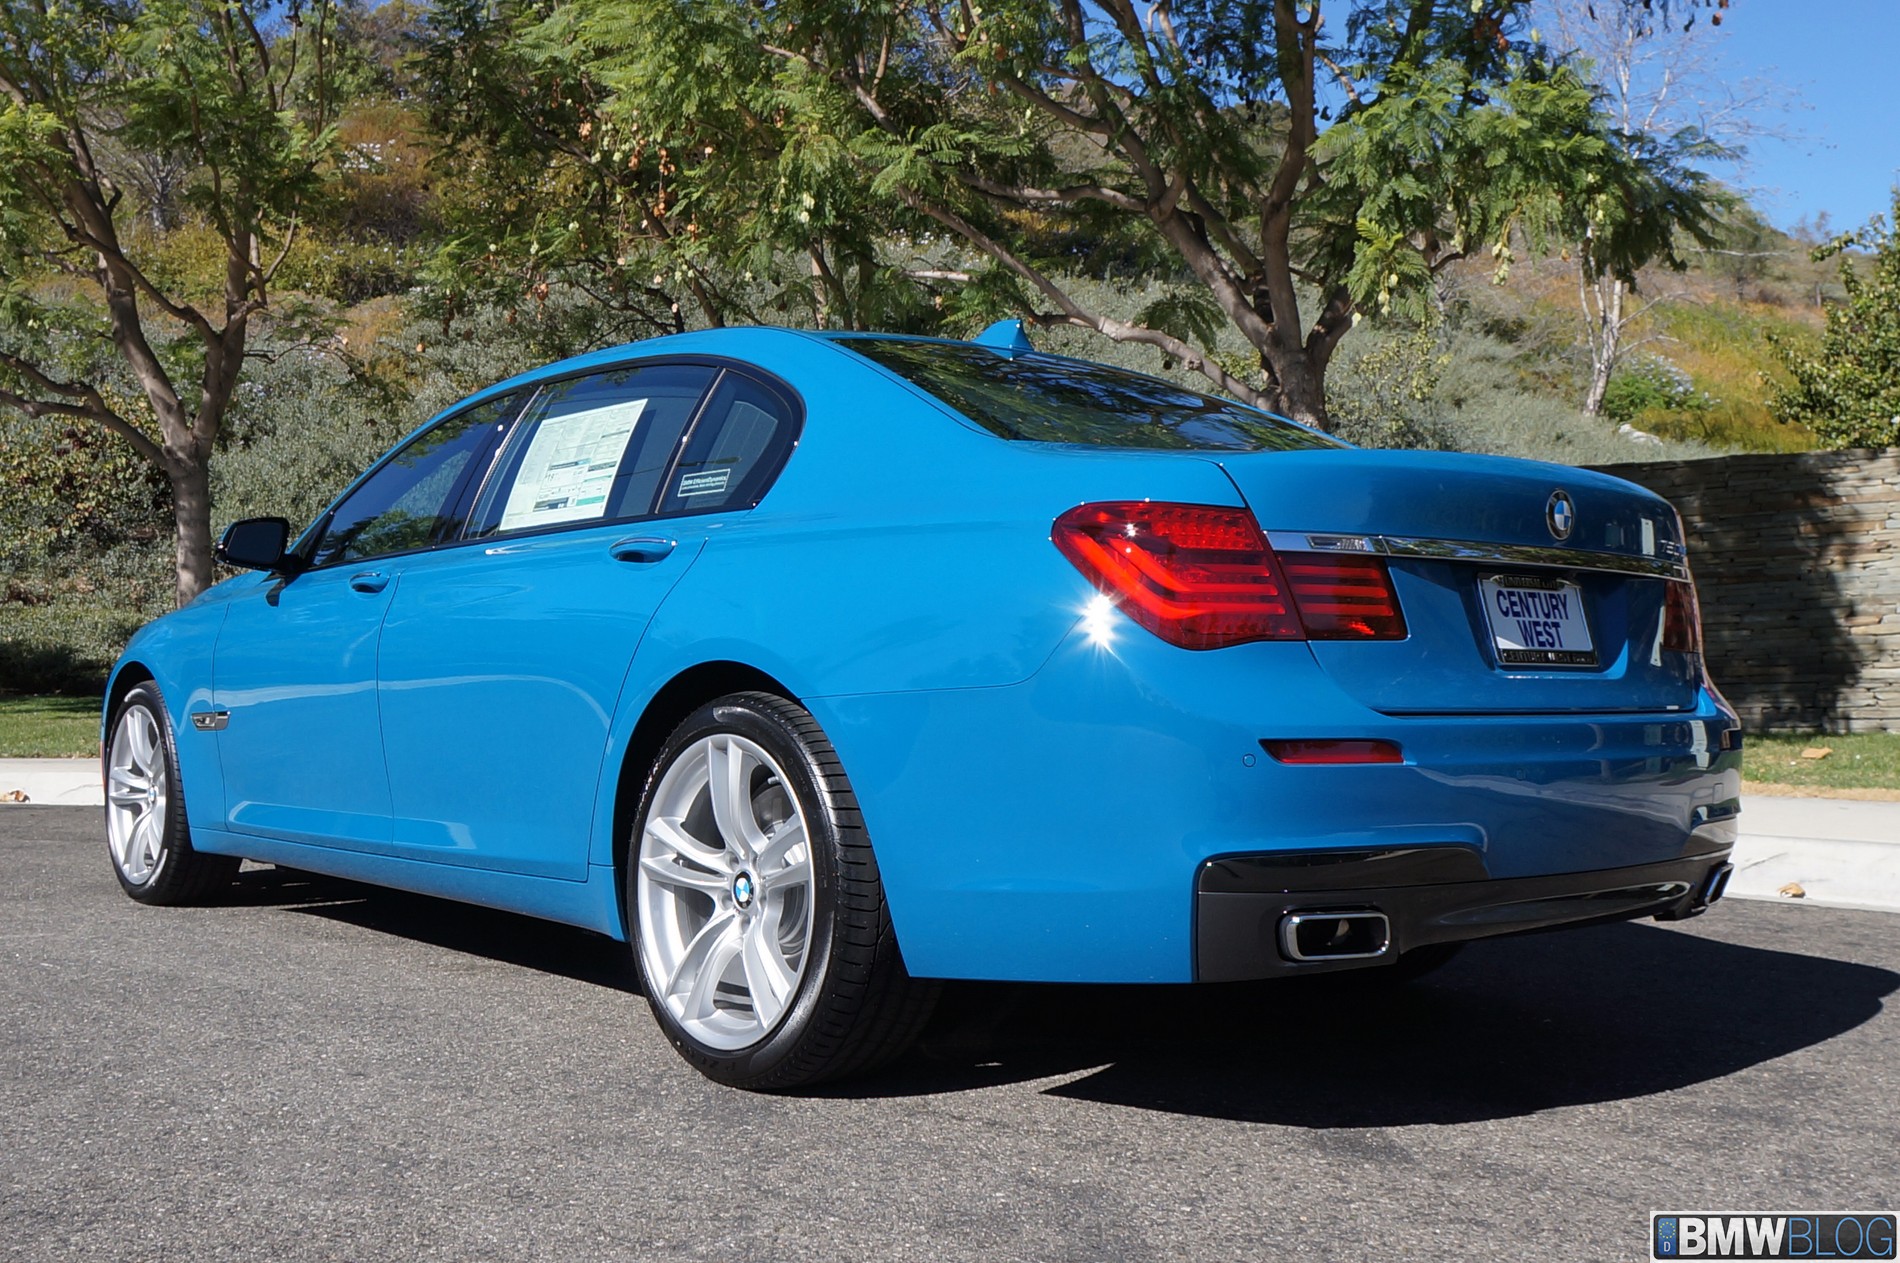 Meet blue. Laguna Blue BMW. Laguna Seca Blue. Laguna Seca BMW. BMW individual Laguna Seca Blue.